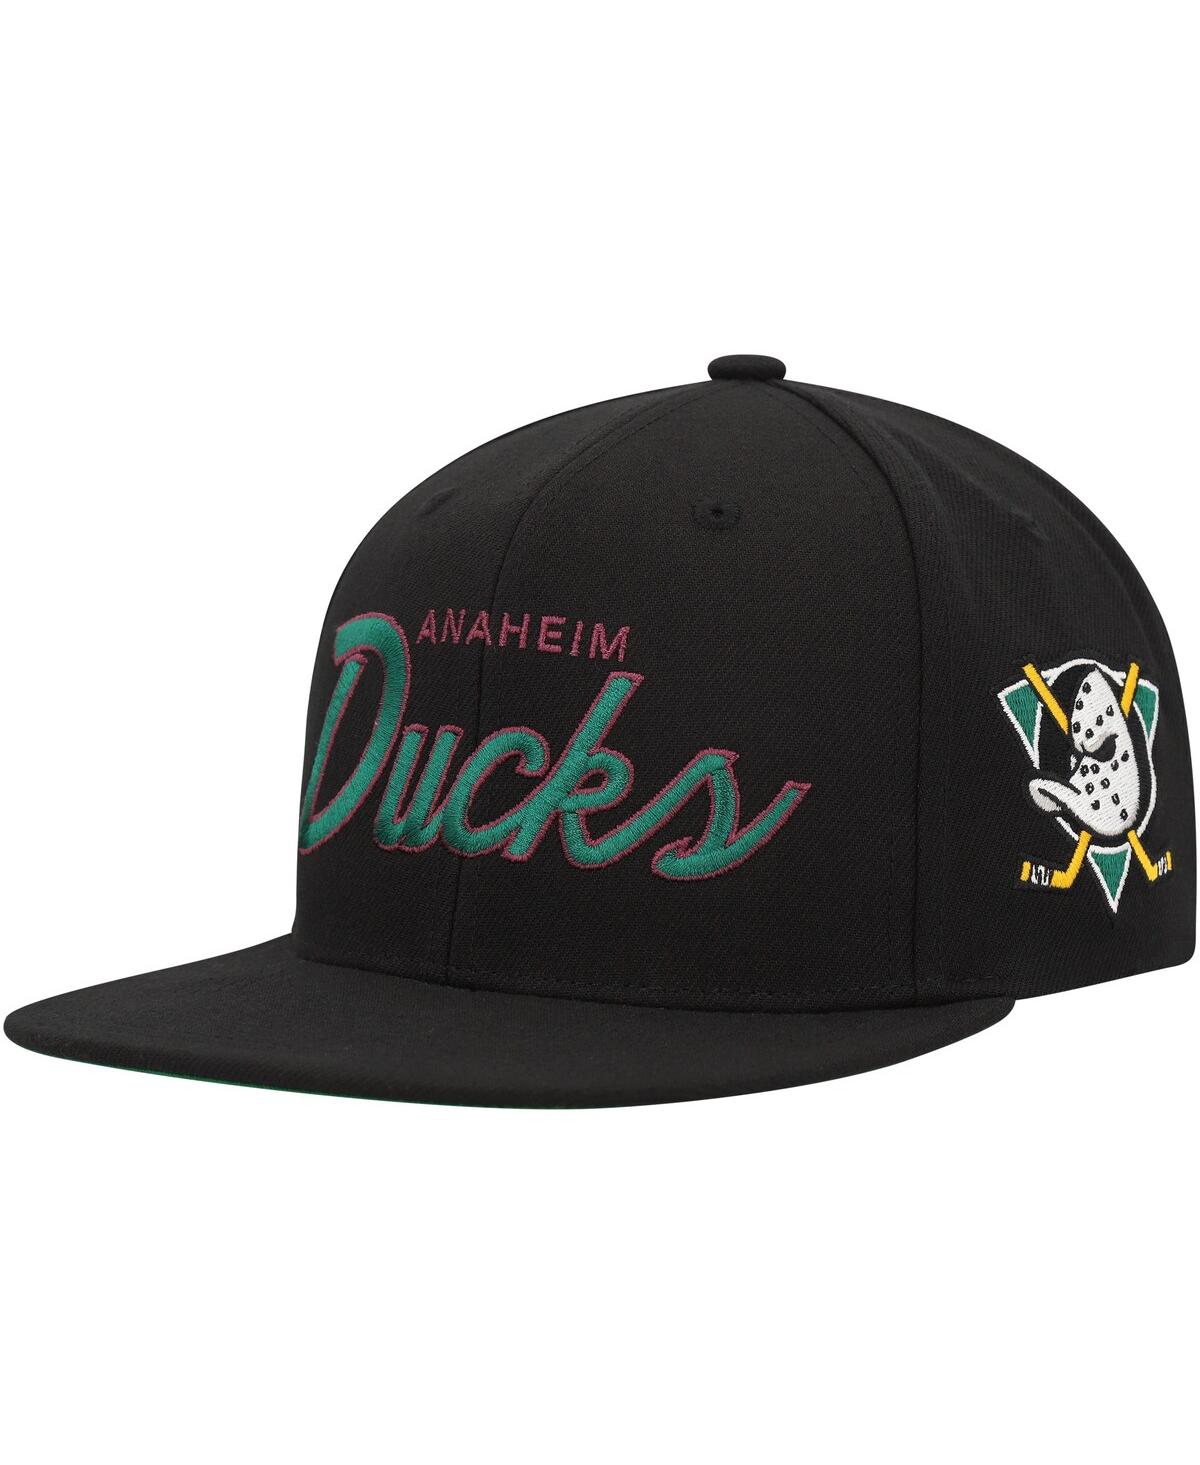 Men's Mitchell & Ness Black Anaheim Ducks Core Team Script 2.0 Snapback Hat - Black